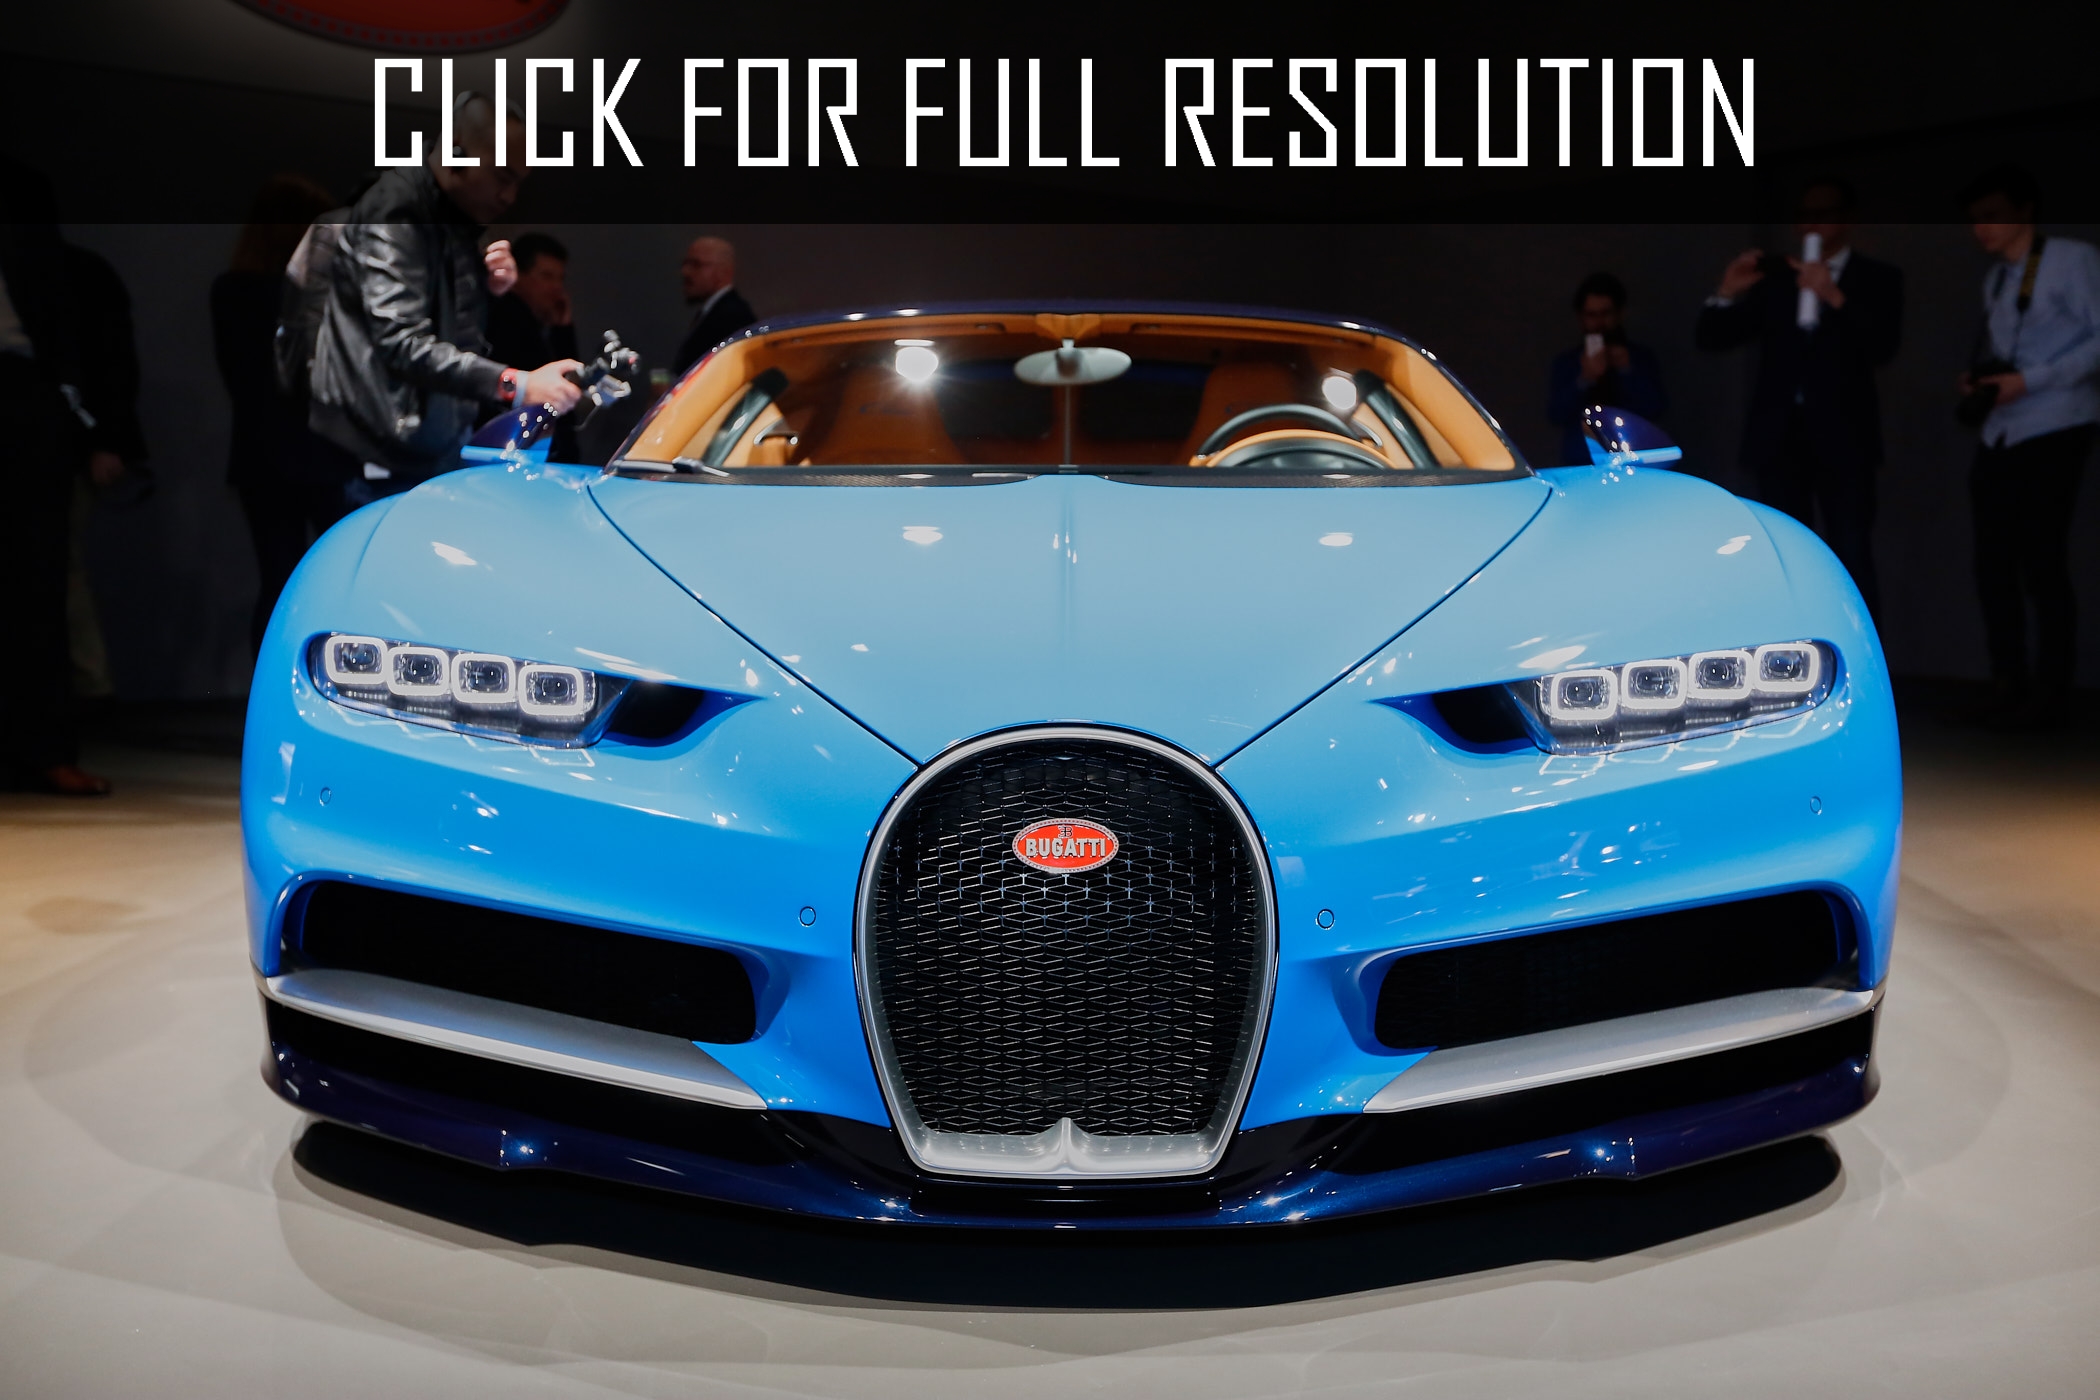 2018 Bugatti Chiron Gt